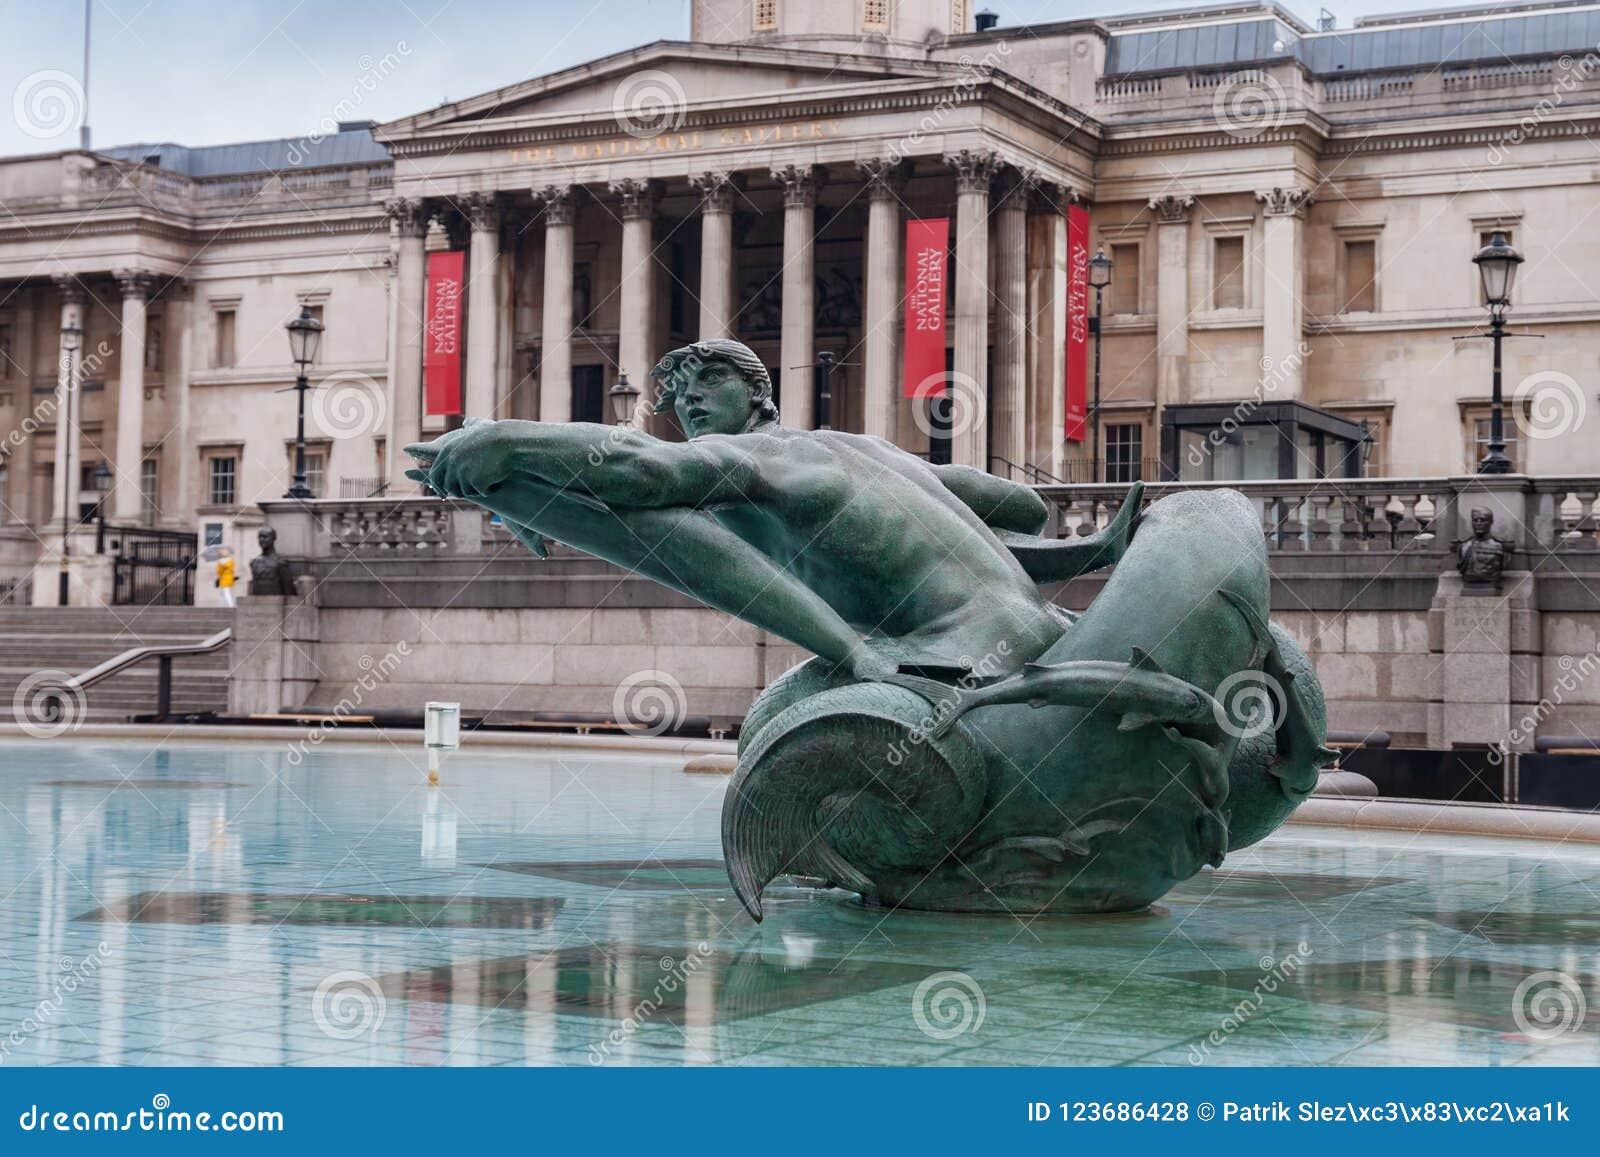 Mermaid Statues on Fountain on Trafalgar Square in London Editorial ...